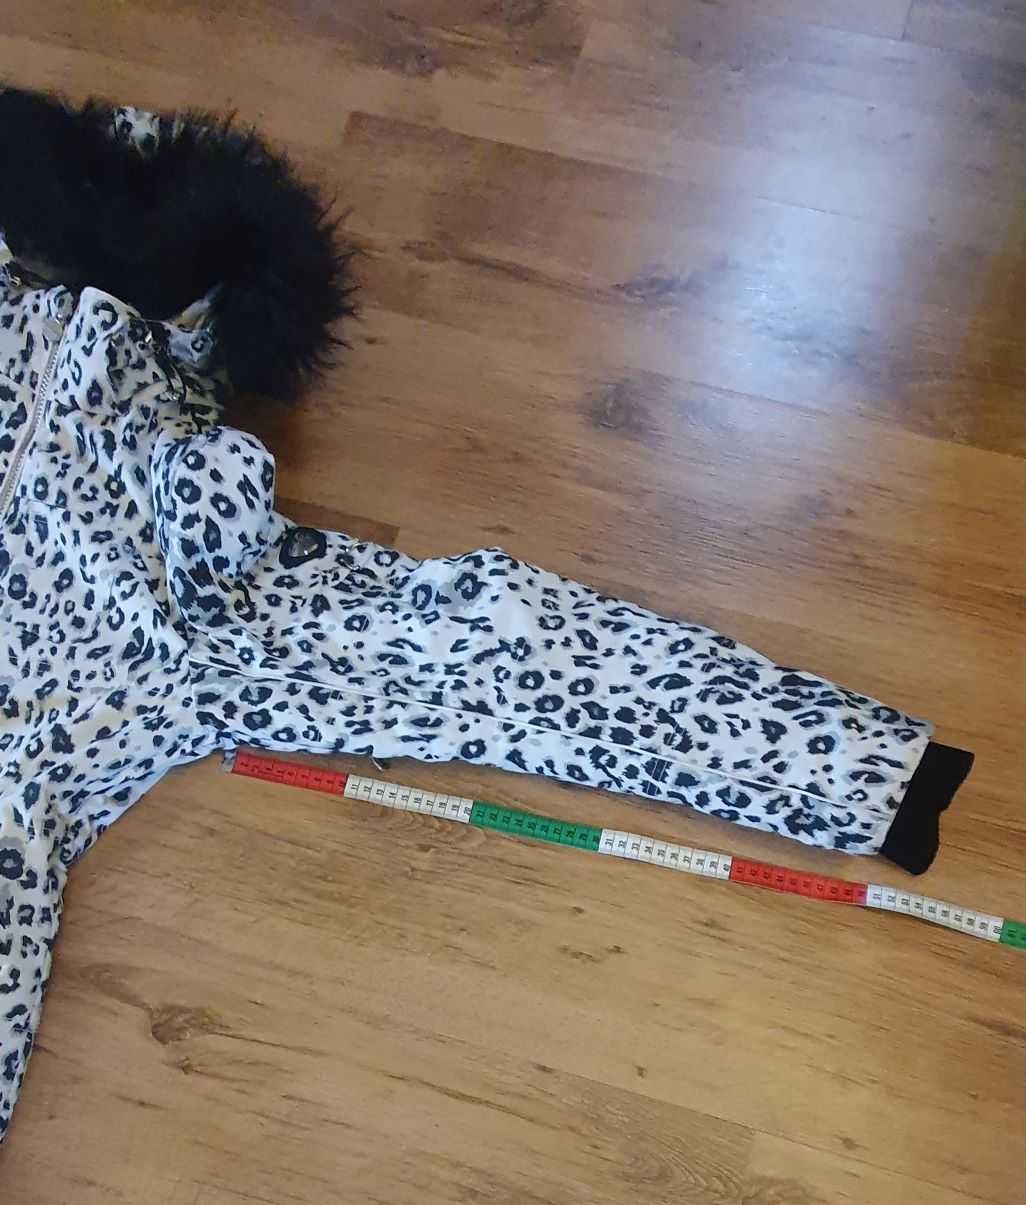 kurtka damska Dare 2 b leopard panterka rozmiar 38 M narciarska